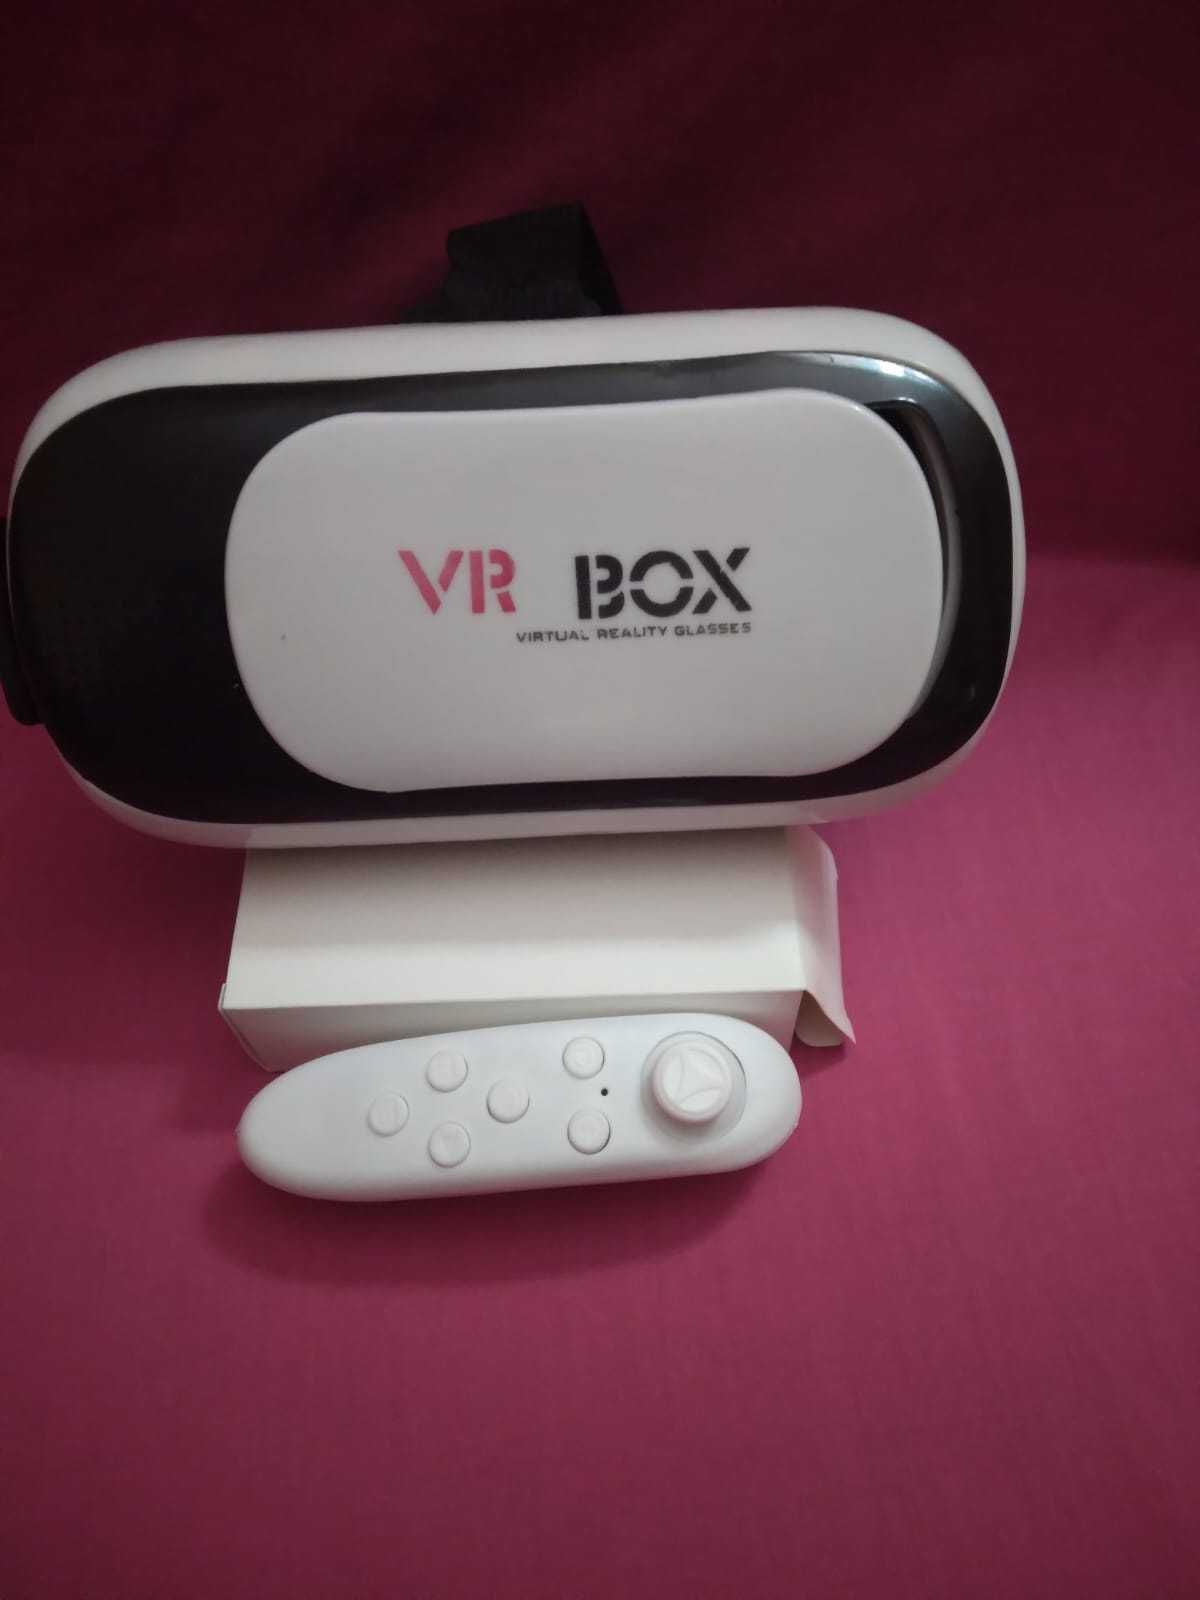 VR BOX Virtual reality glasss